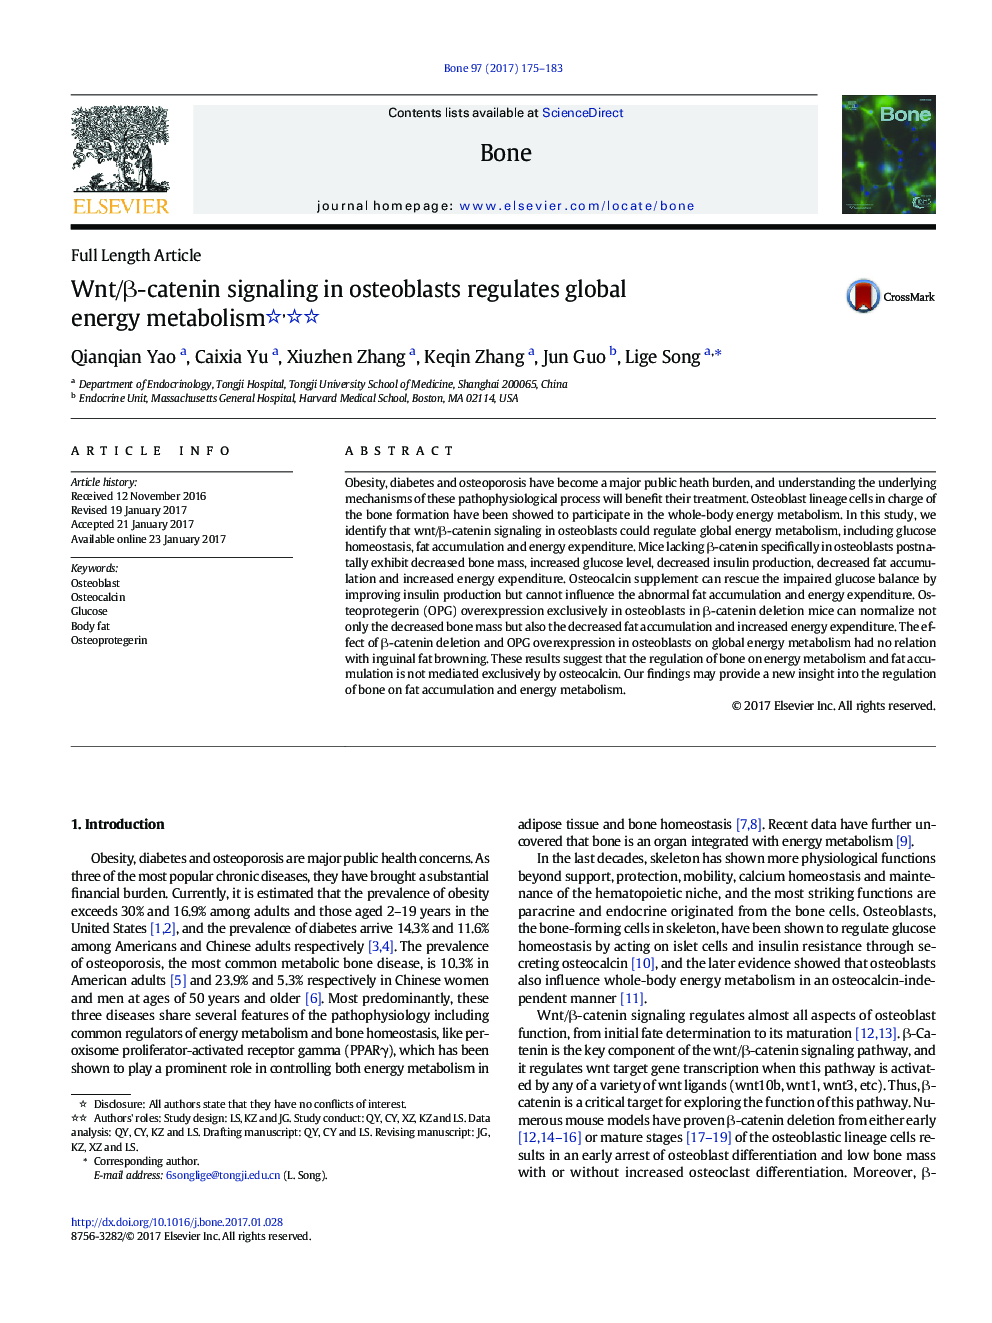 Wnt/Î²-catenin signaling in osteoblasts regulates global energy metabolism